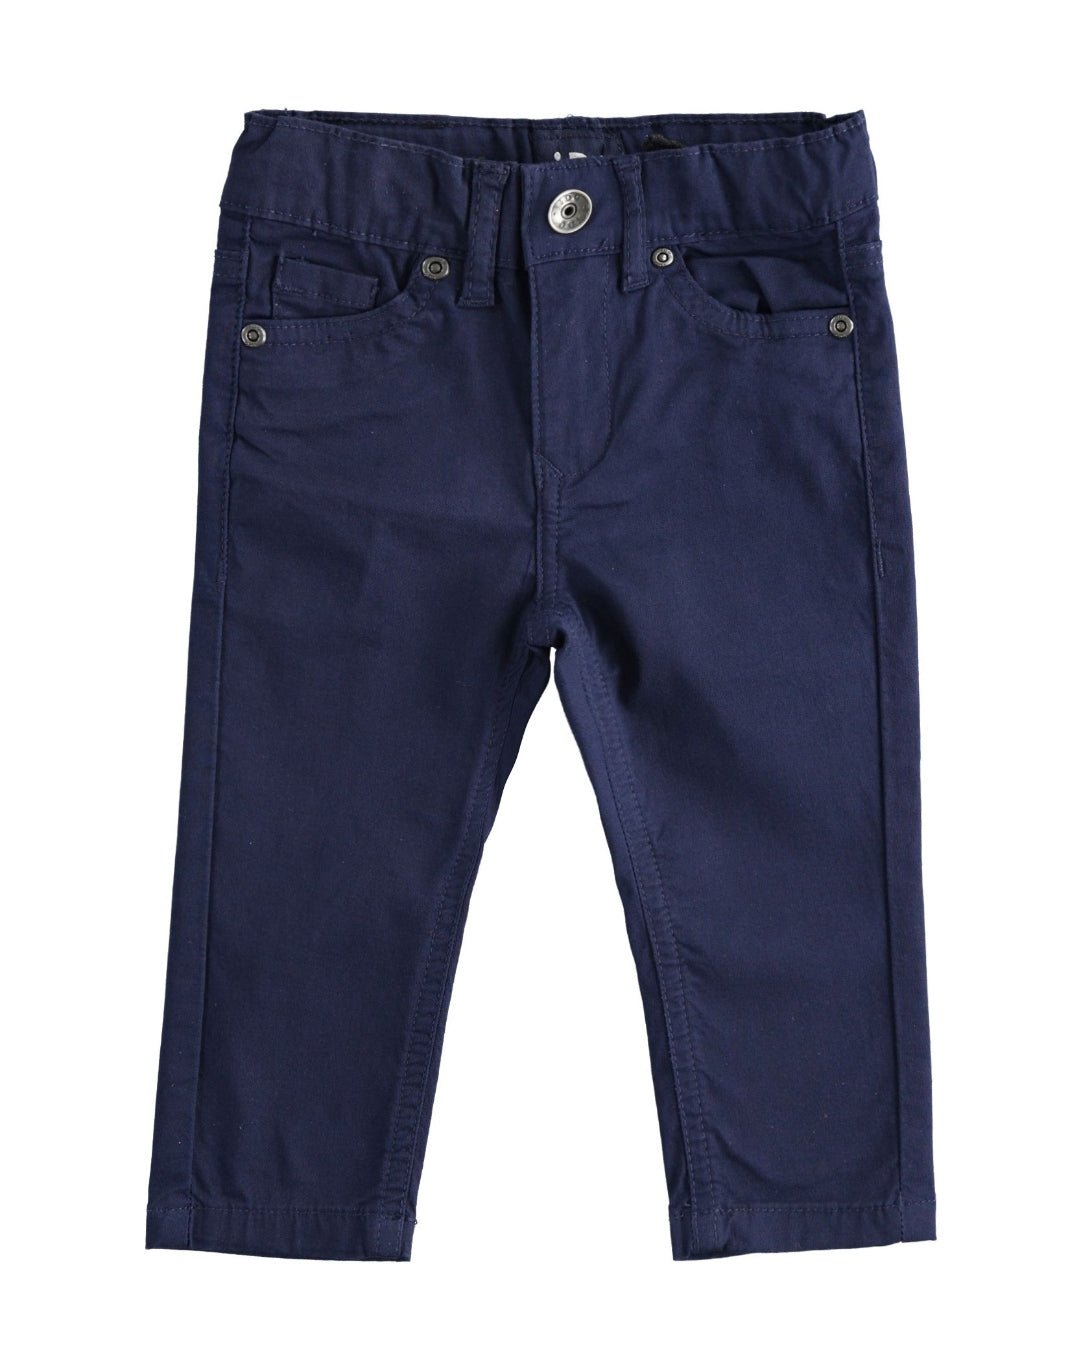 Pantalone lungo cotone - Coccole e Ricami |email: info@coccoleericami.shop| P.Iva 09642670583